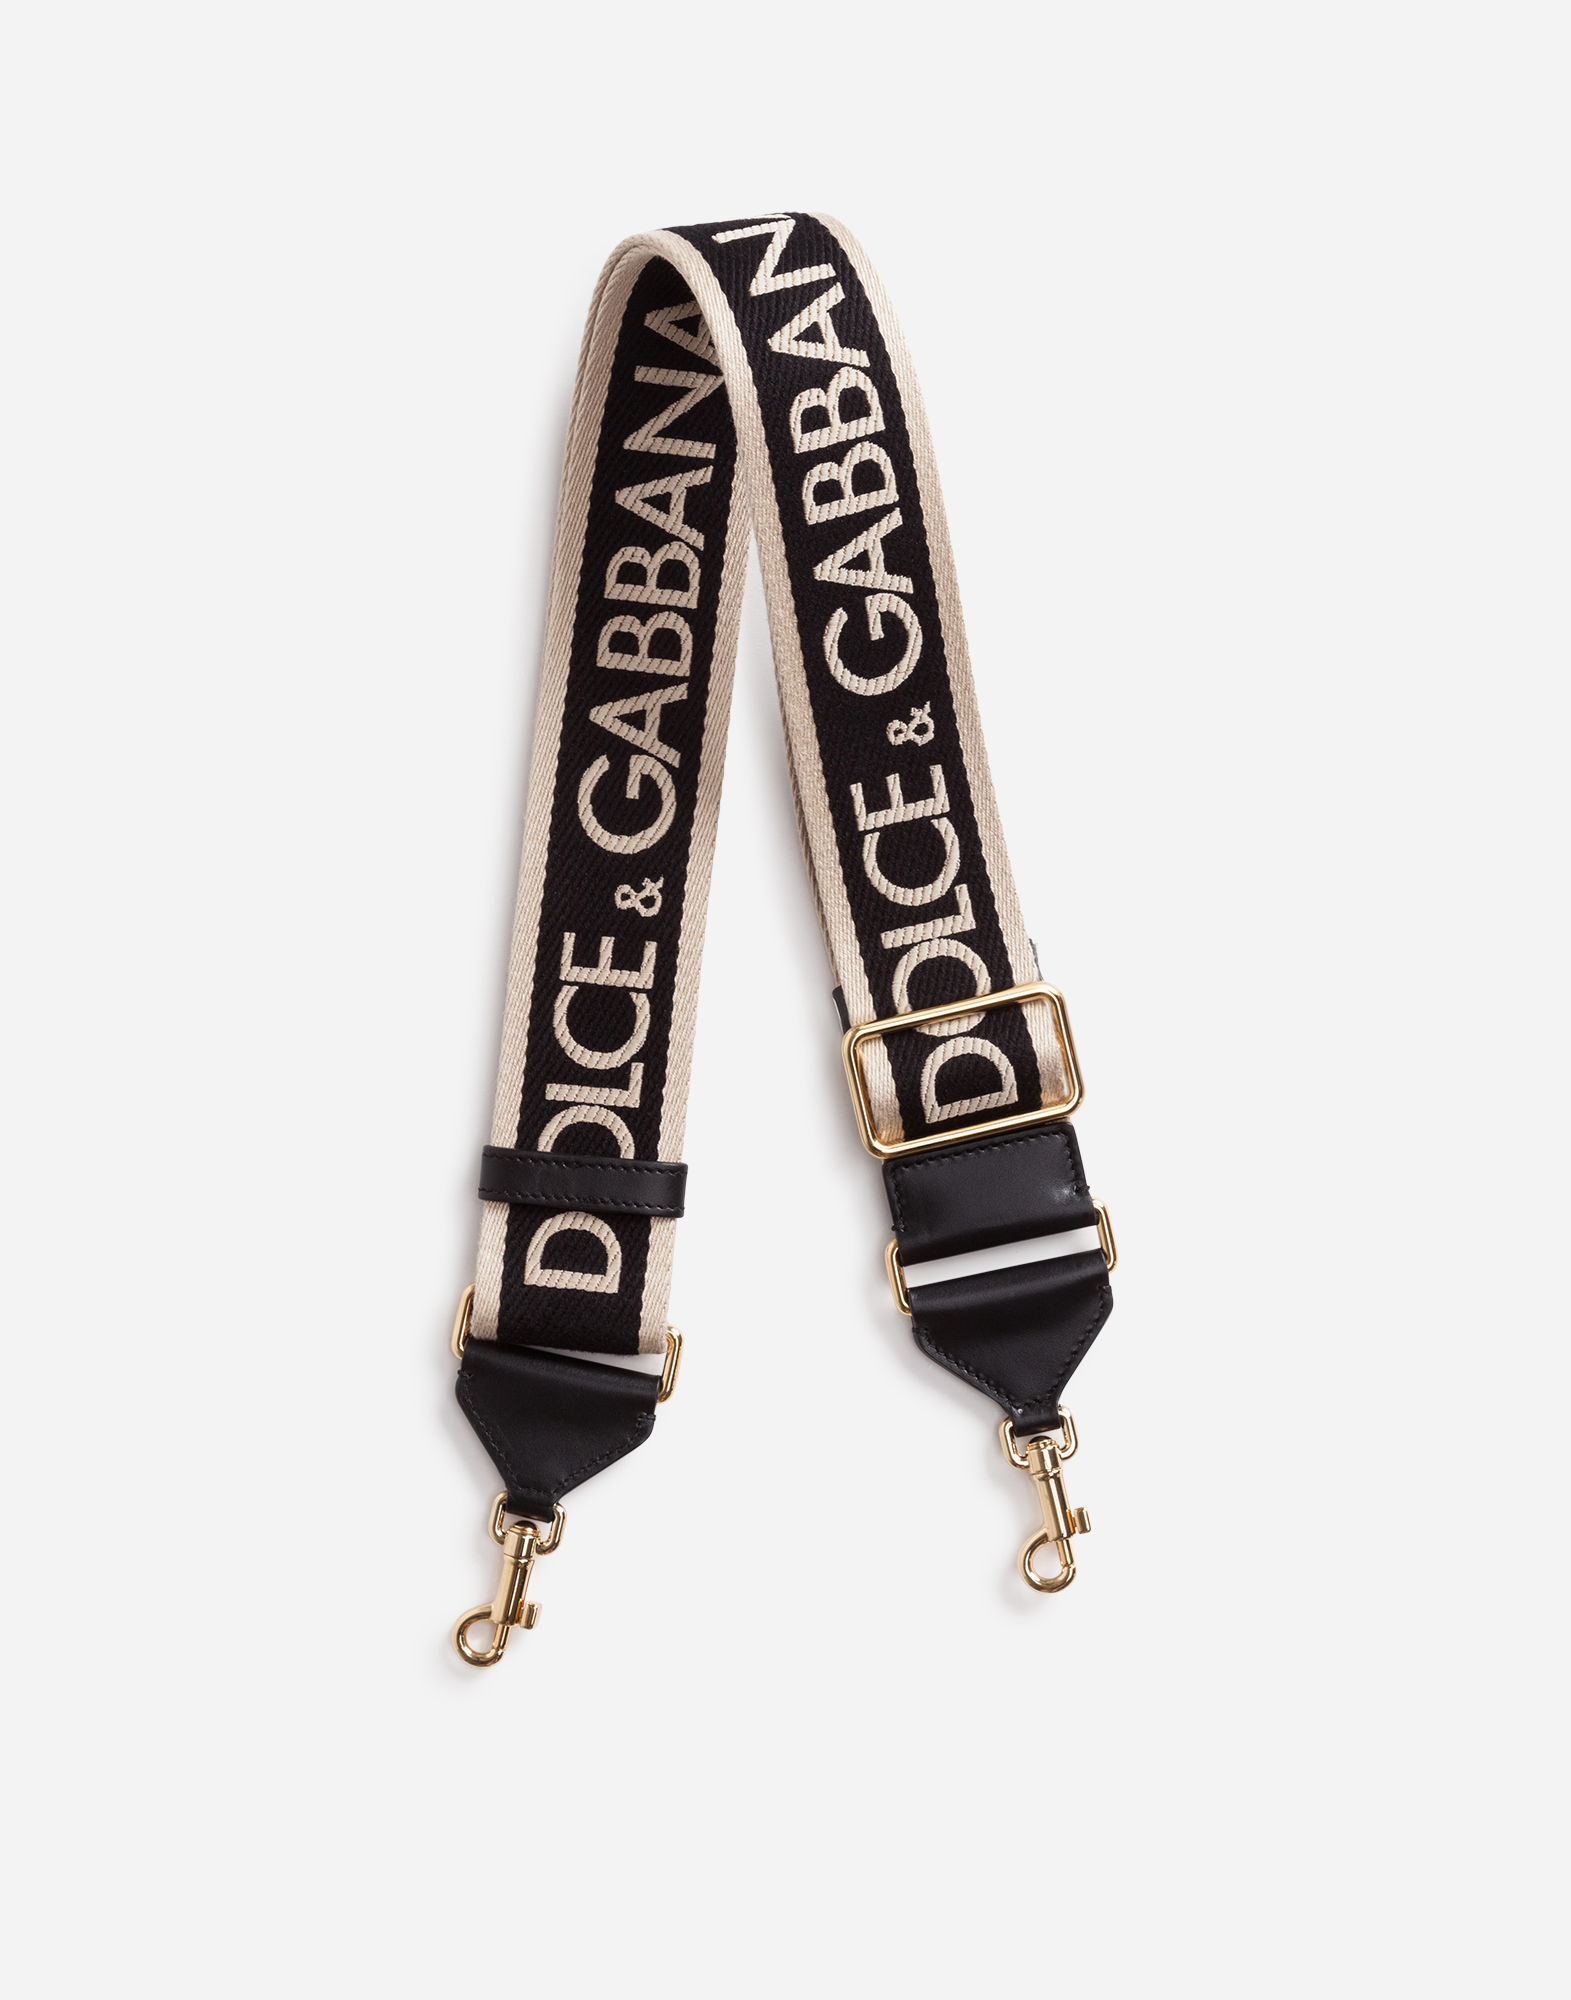 Dolce&Gabbana logo strap in Black/Beige